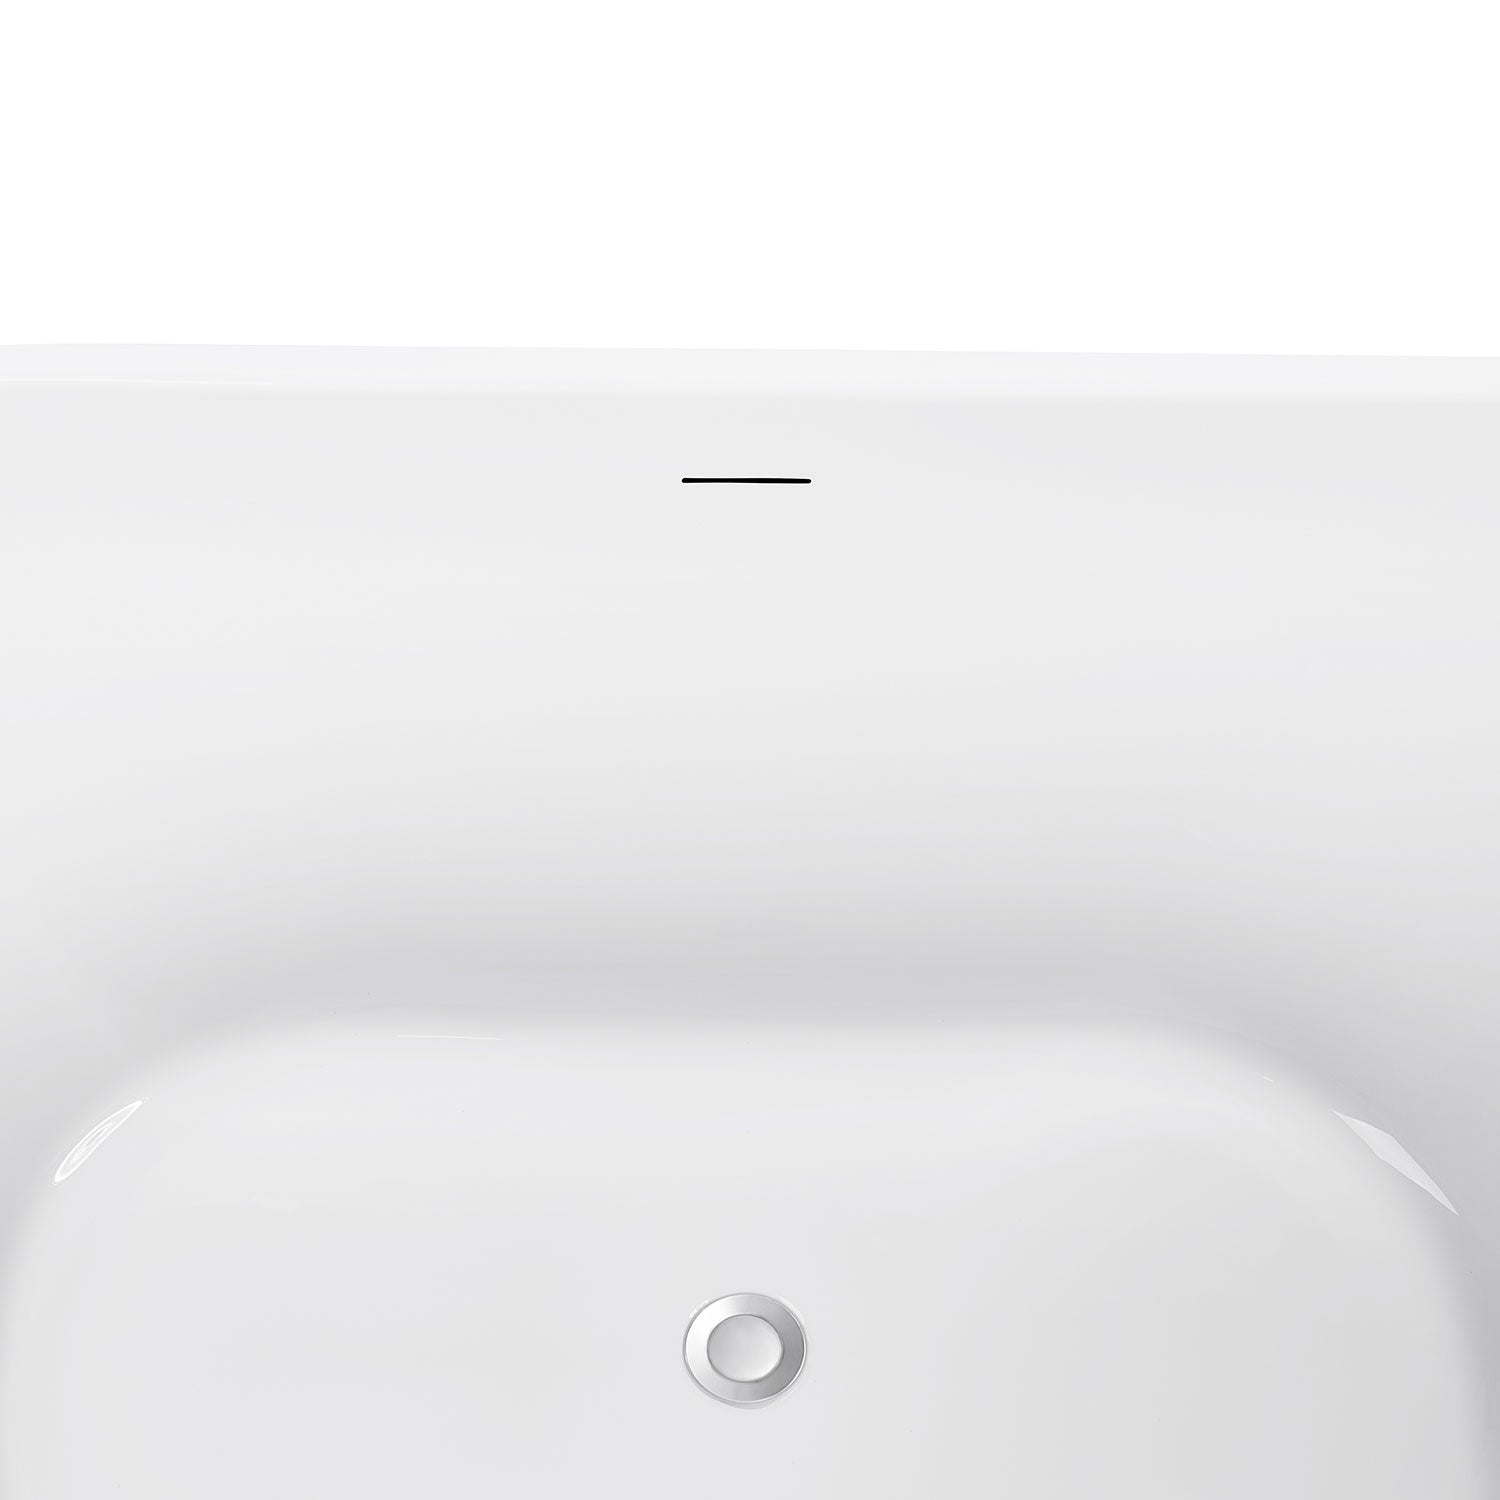 59" 100% Acrylic Freestanding Oval Contemporary Soaking Bathtub